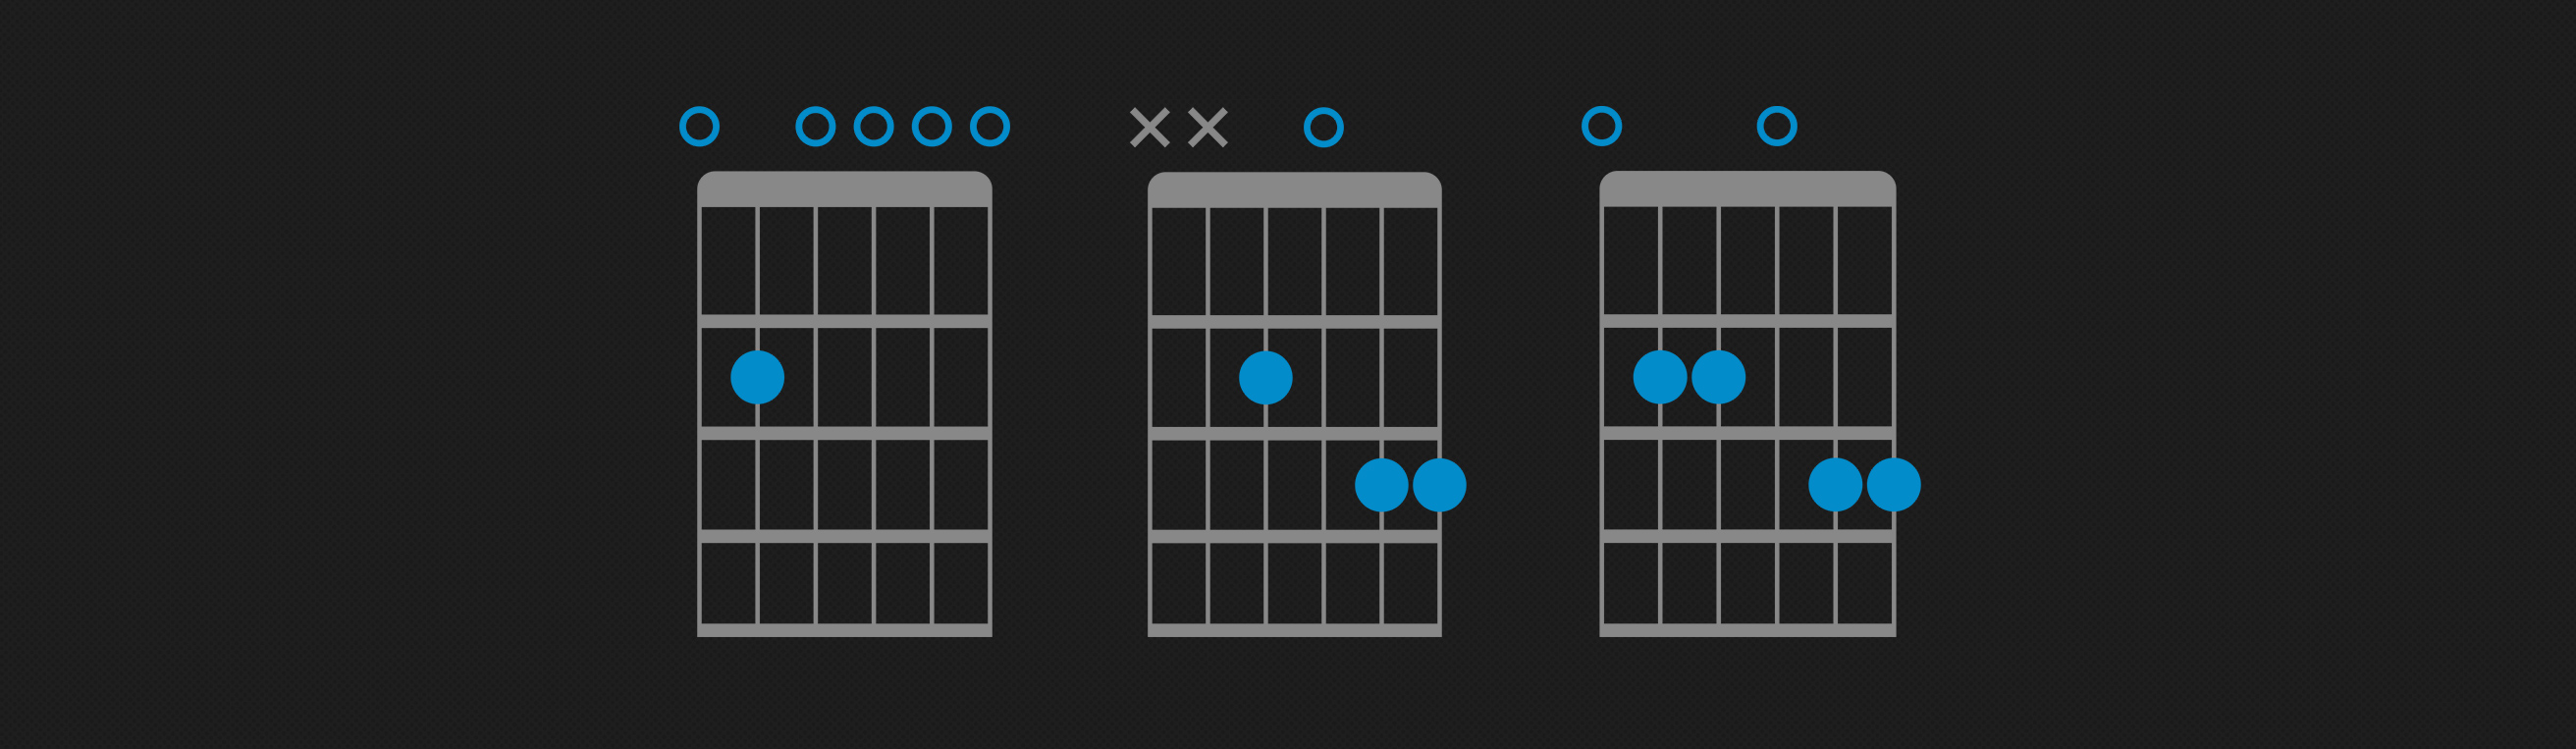 How to Play E Minor 7 Guitar Chord | Em7 Chord | Fender Play